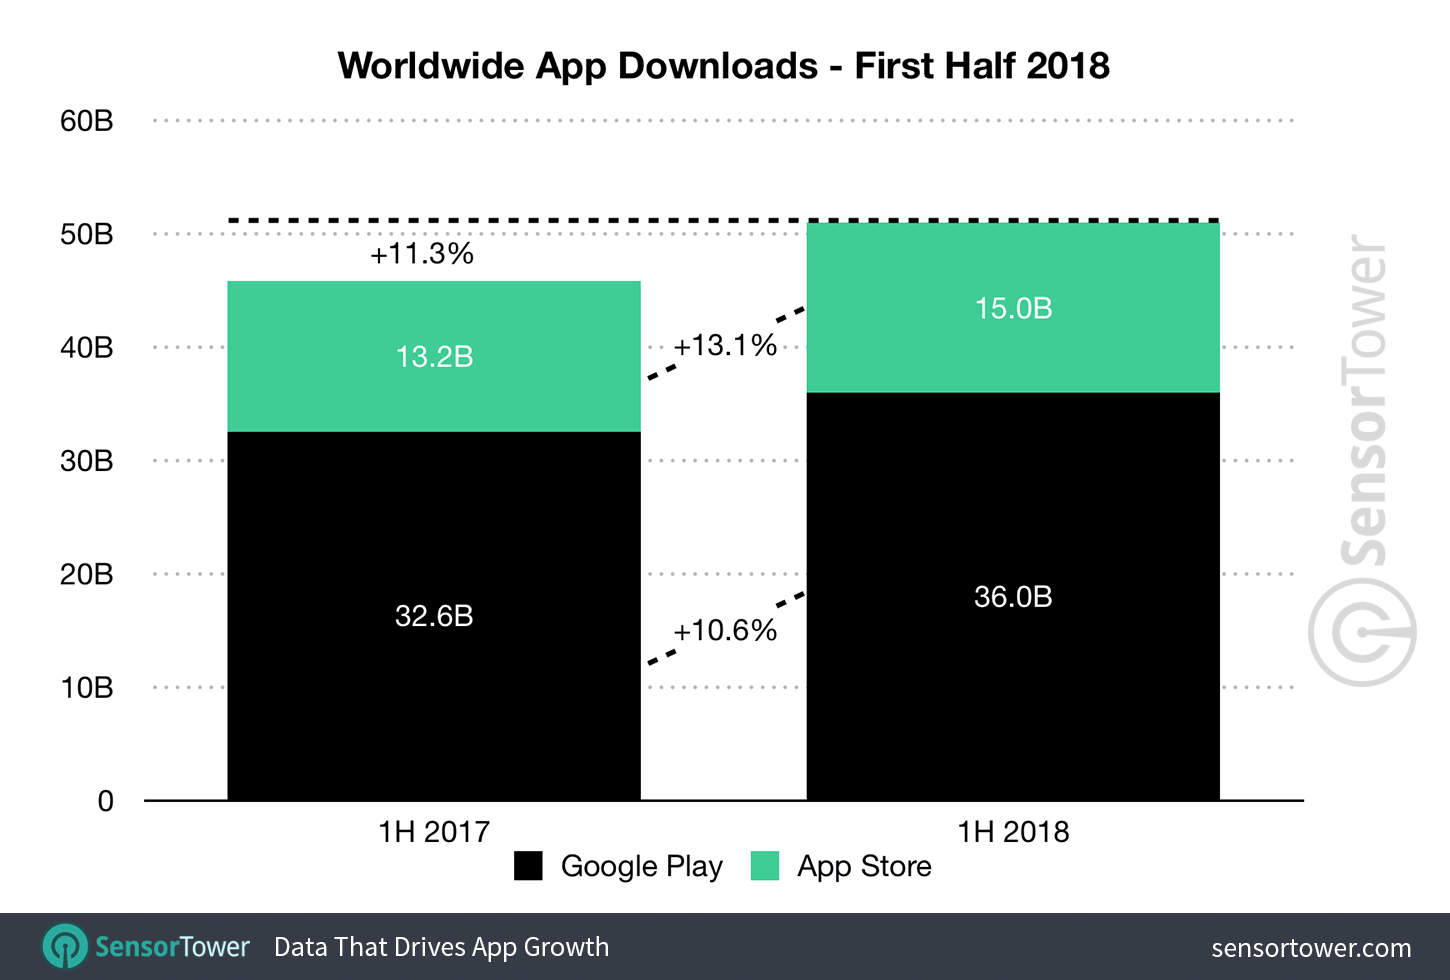 1H 2018 Mobile App Downloads